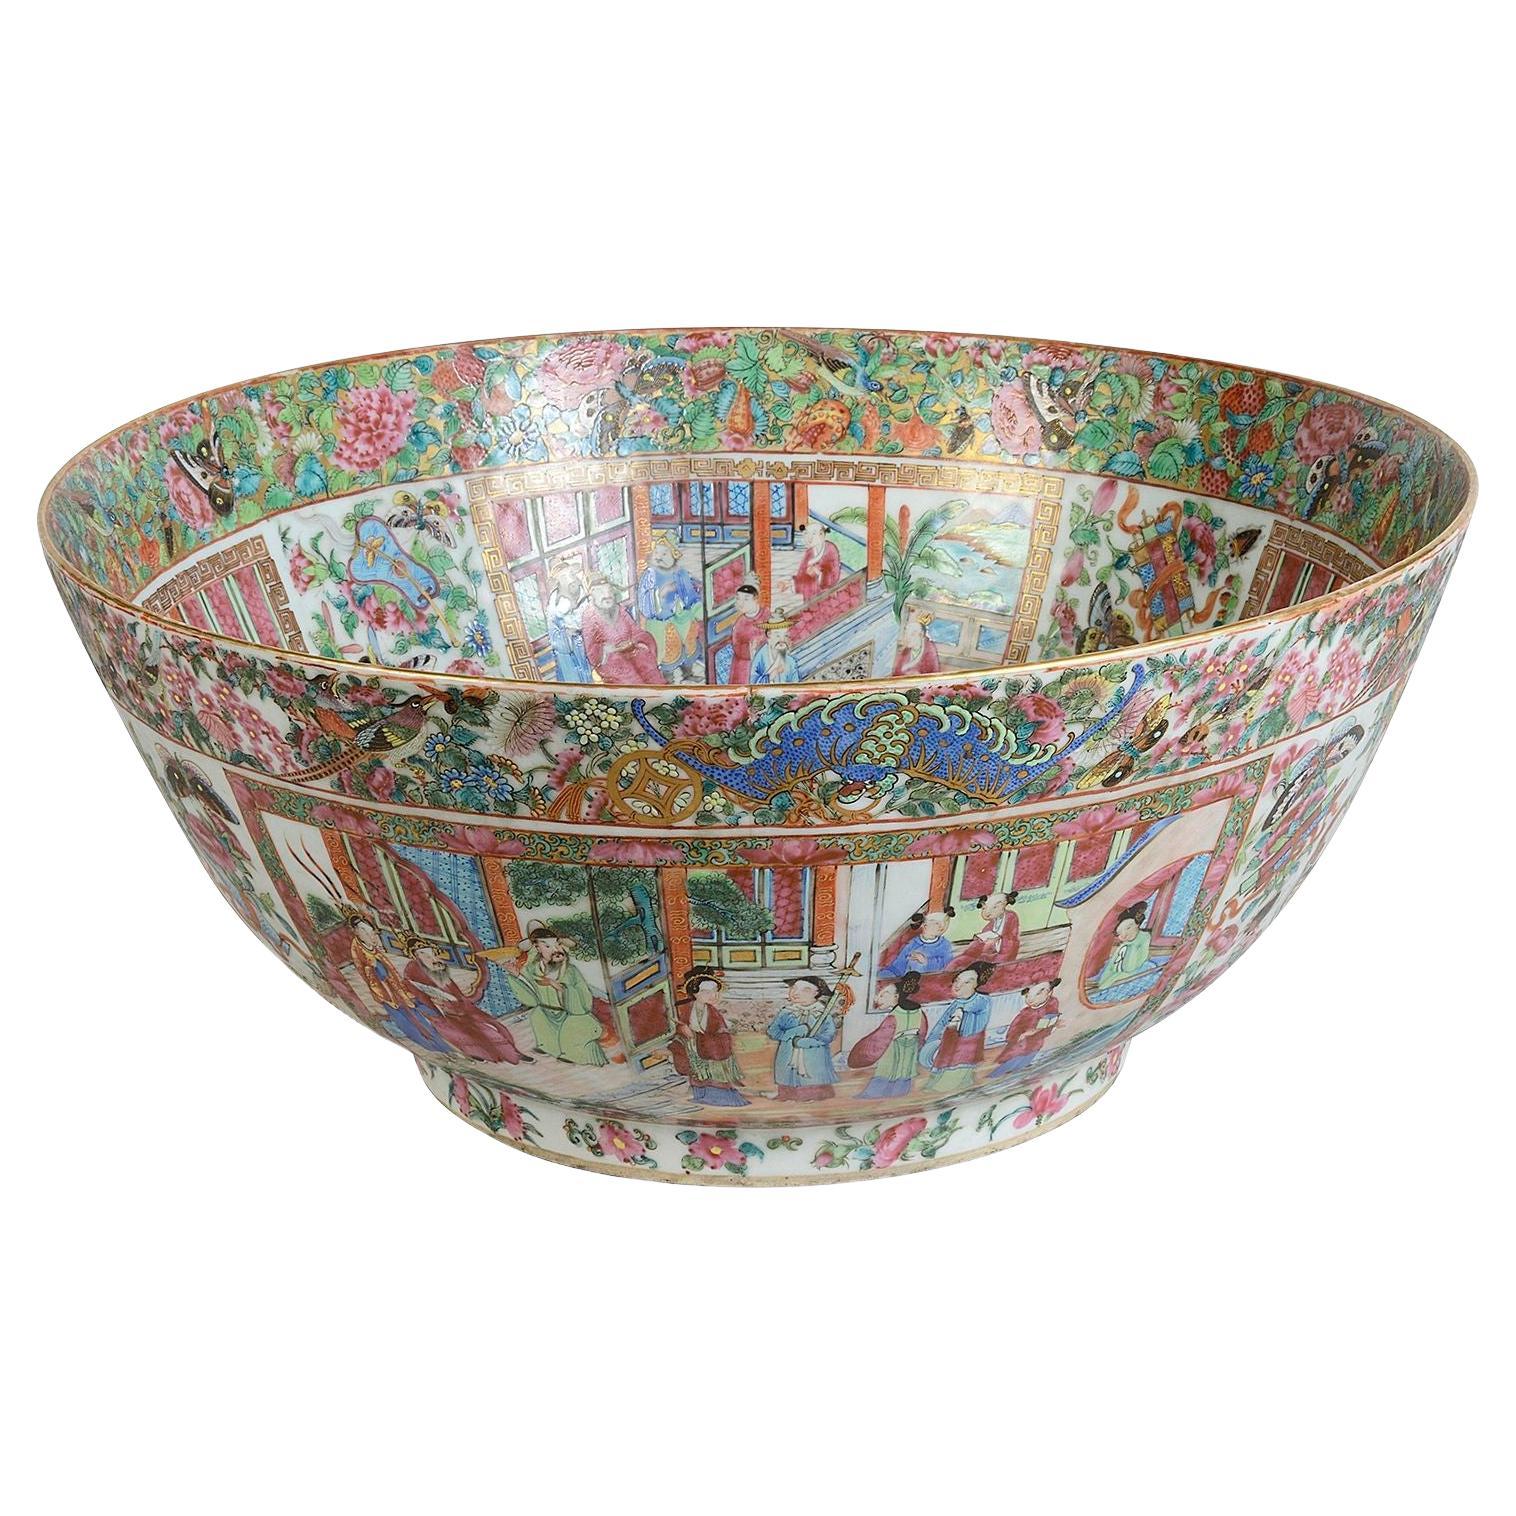 Rose medallion bowl, 19th Century, 15" diameter